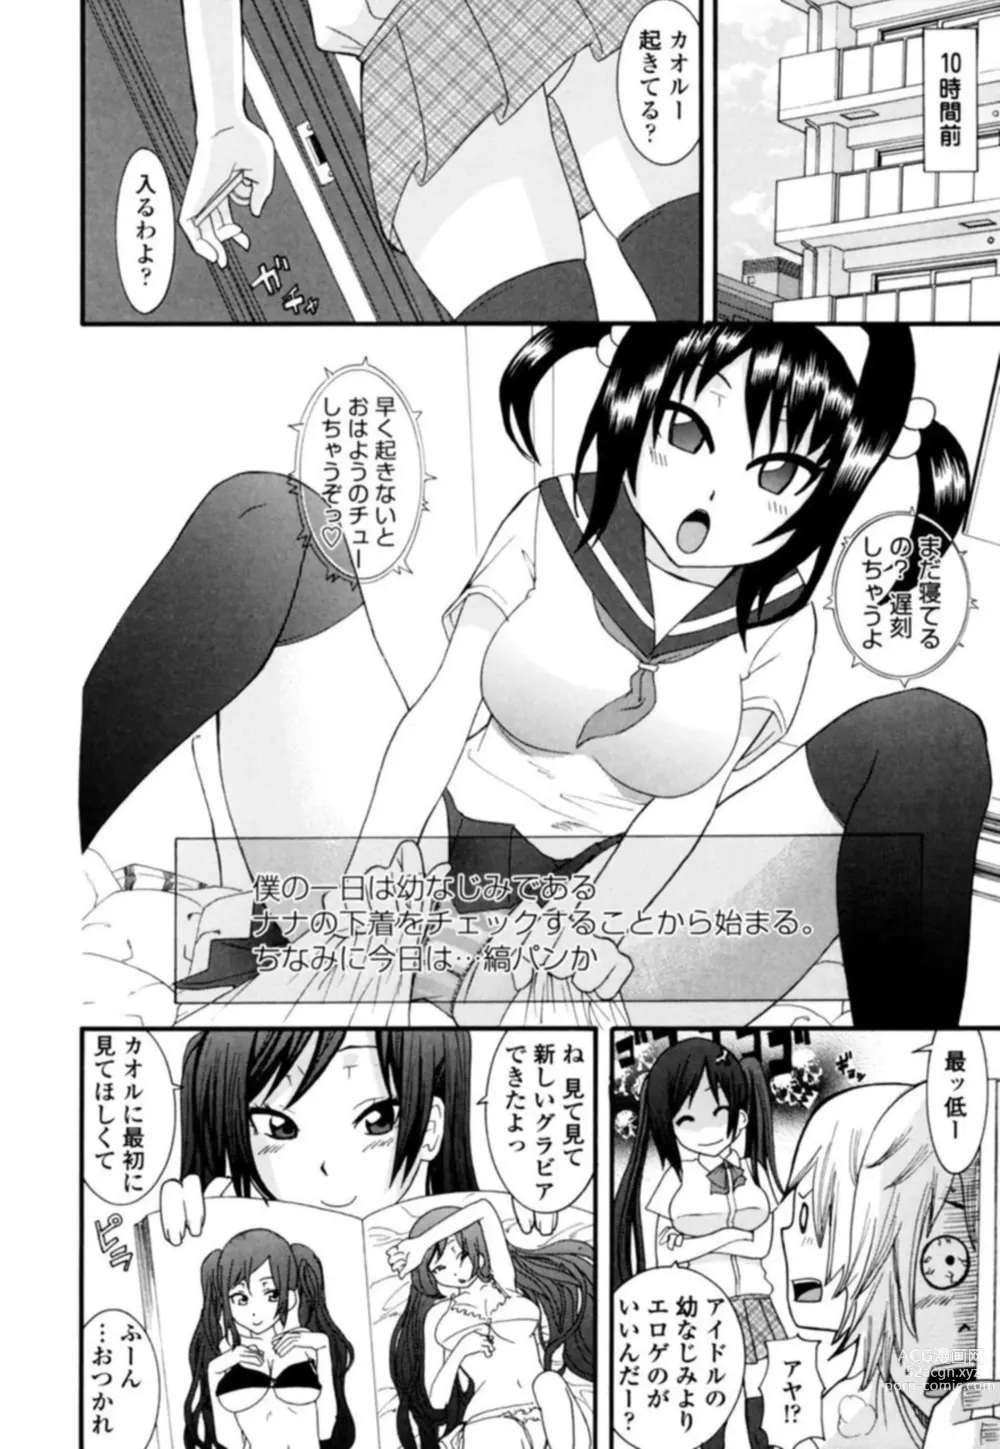 Page 4 of manga Ane ni Nari Kiri Shiru Joyū!?~ Mubōbi bijo o Yari Taoshi ~ 1